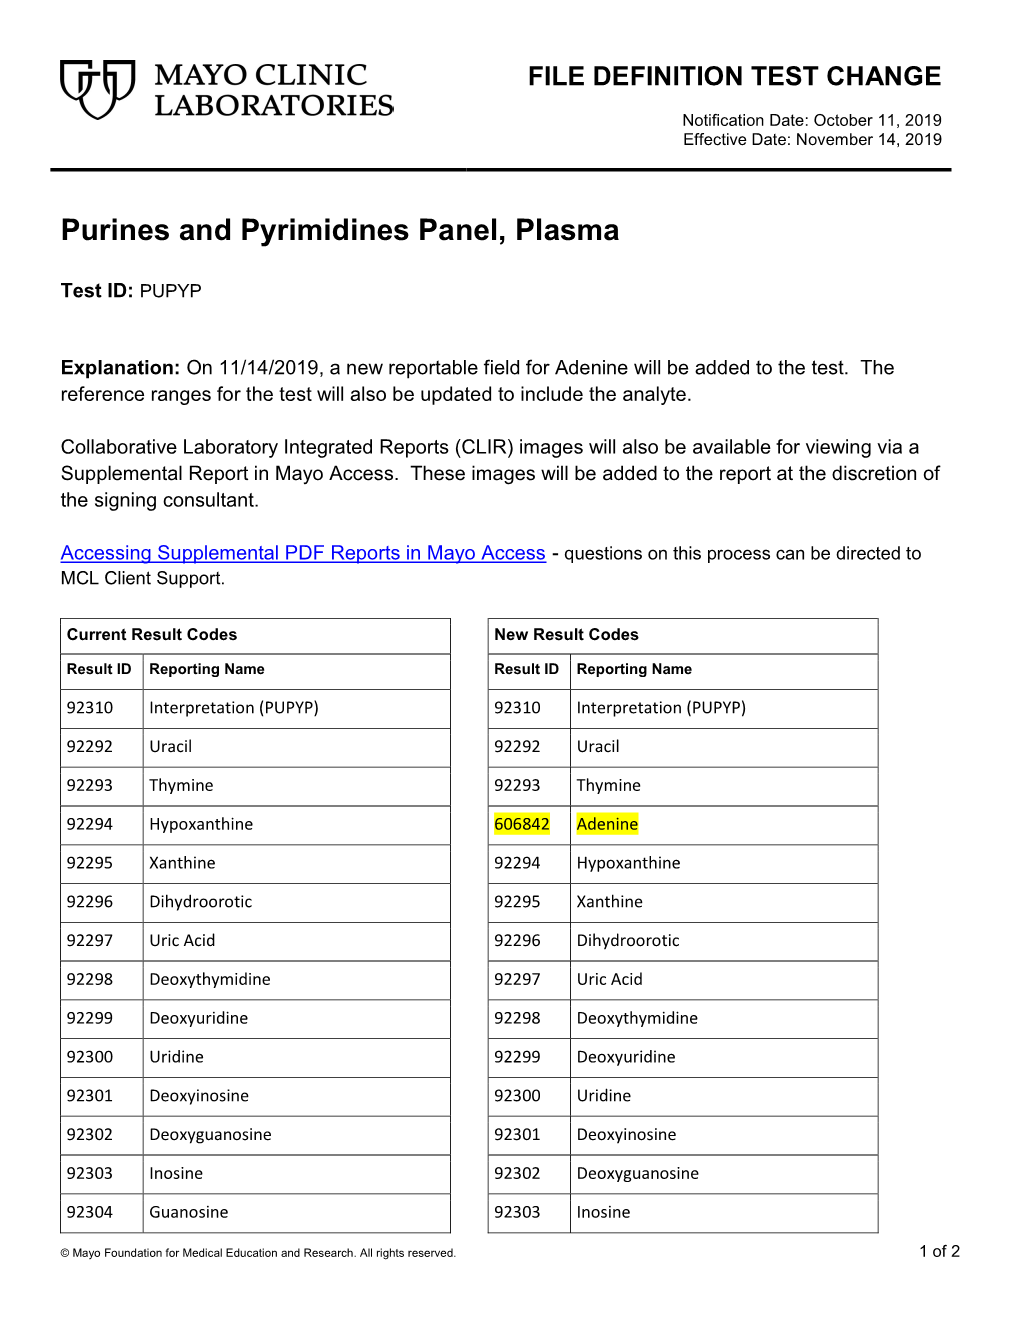 Purines and Pyrimidines Panel, Plasma